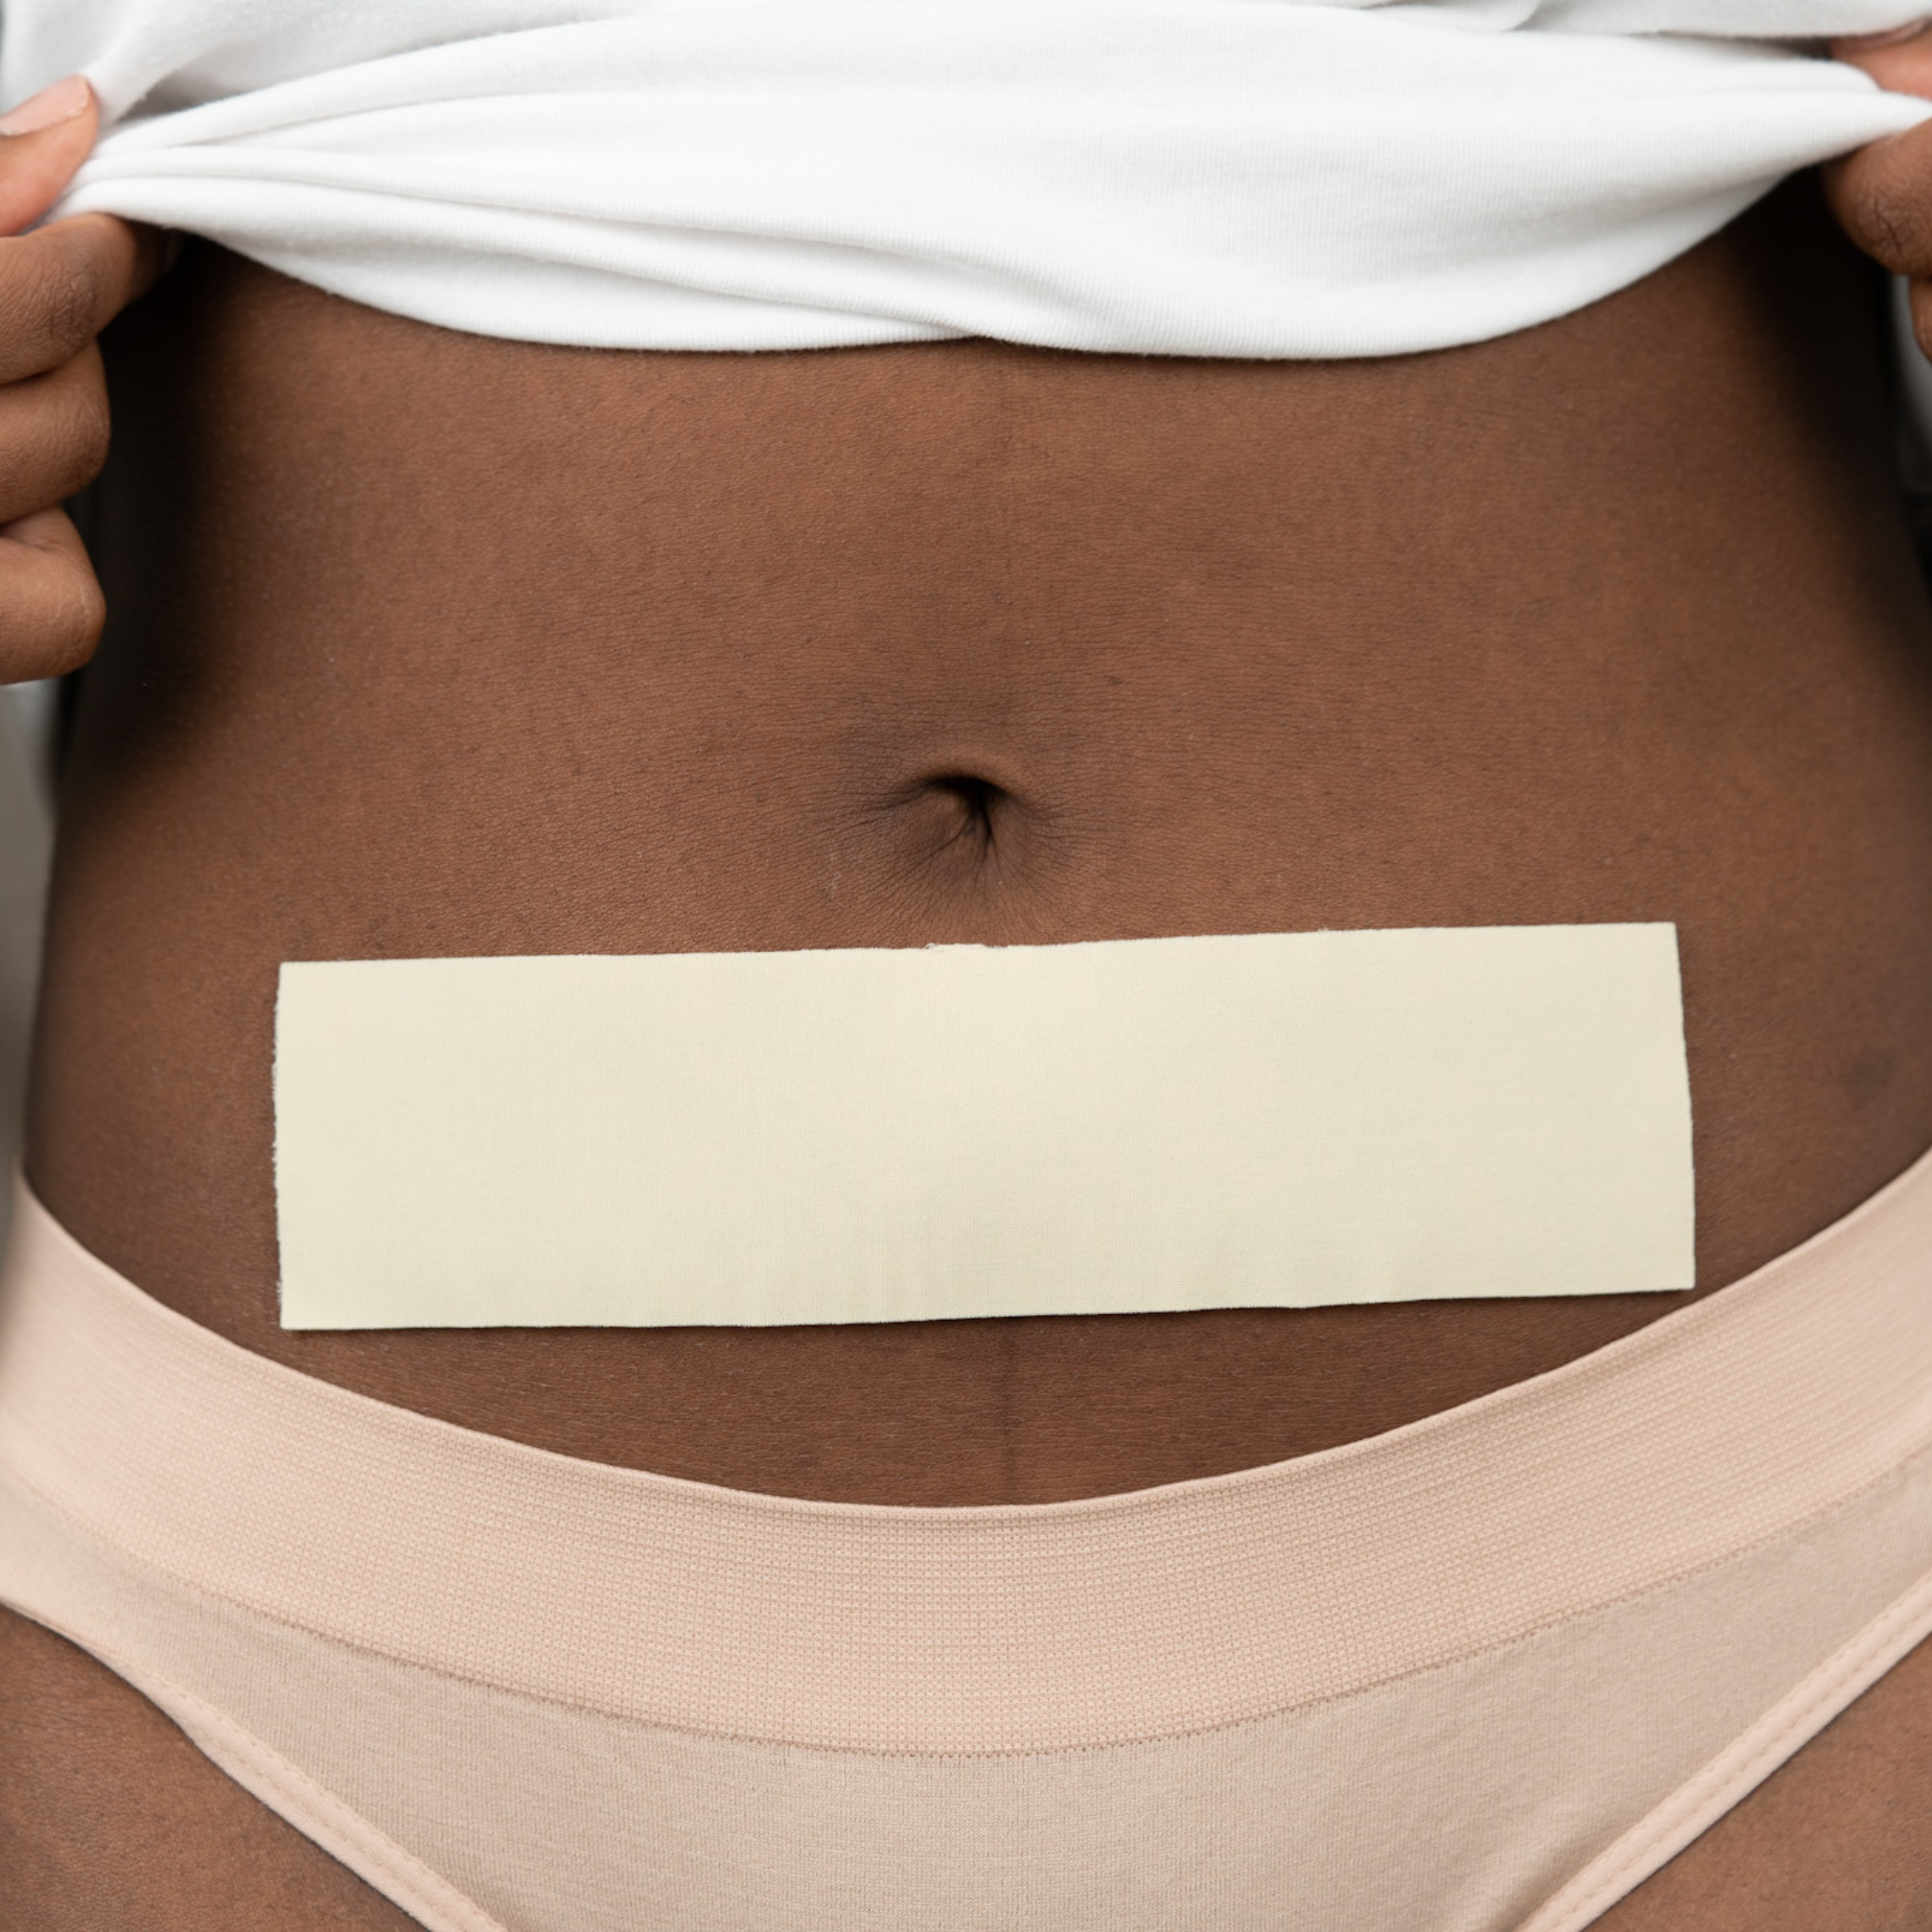 Advanced Medical-Grade 2" X 8" Strip on black women's stomach | beige